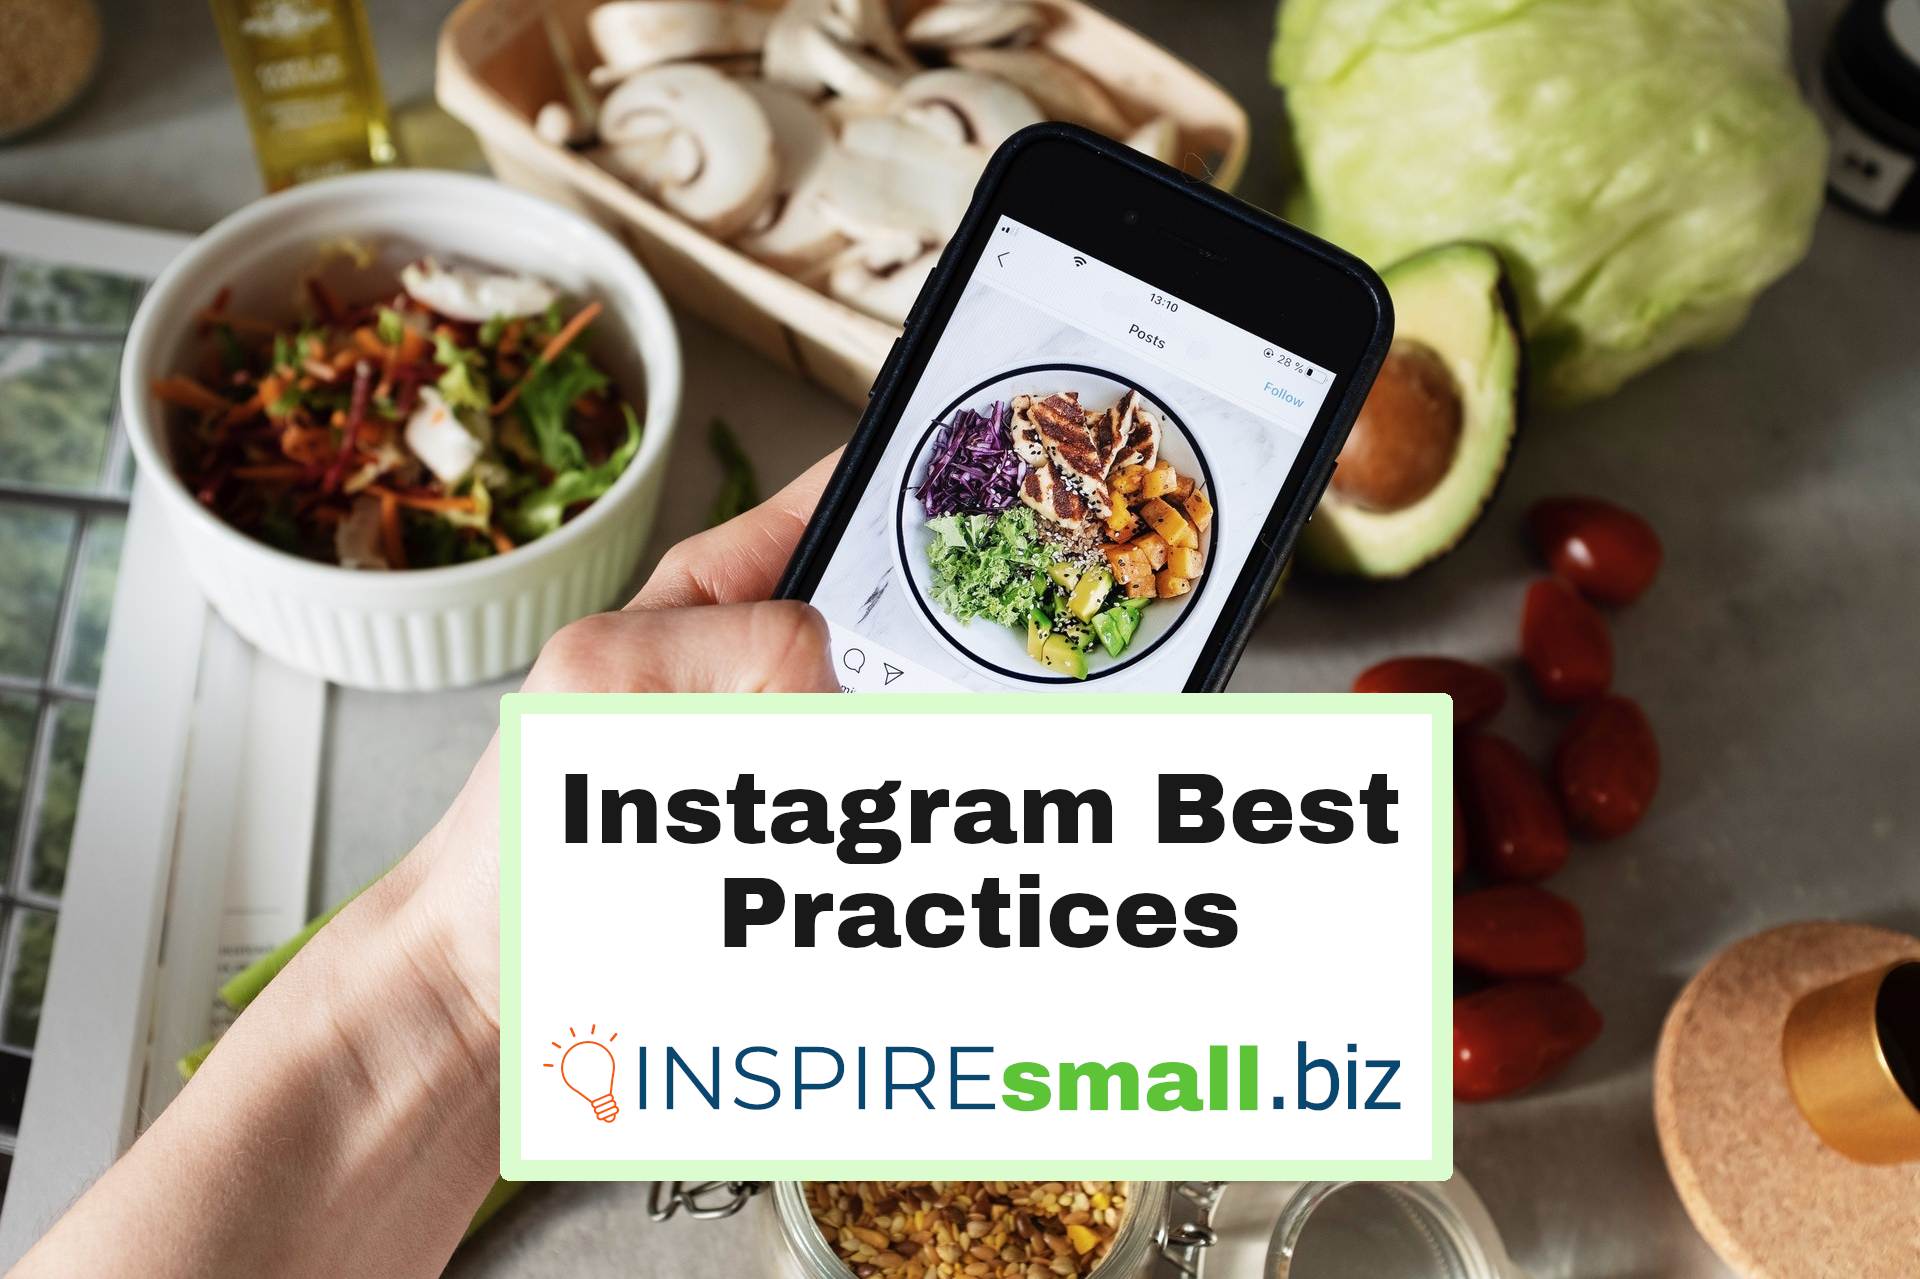 Get Started on Instagram, blog from INSPIREsmall.biz